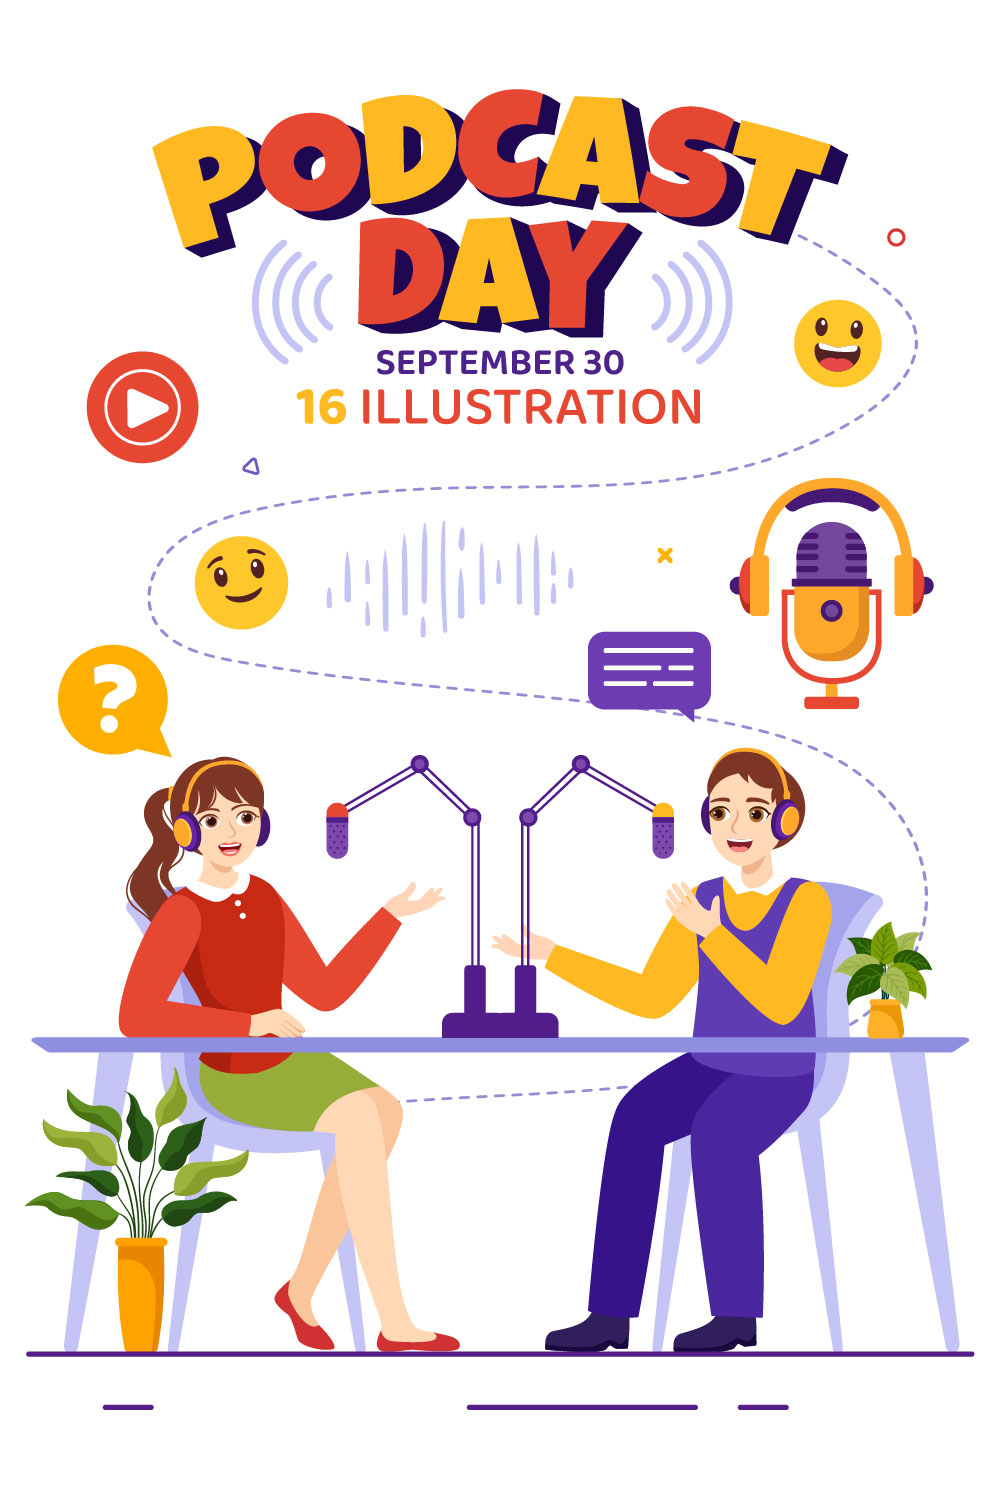 16 International Podcast Day Illustration pinterest preview image.